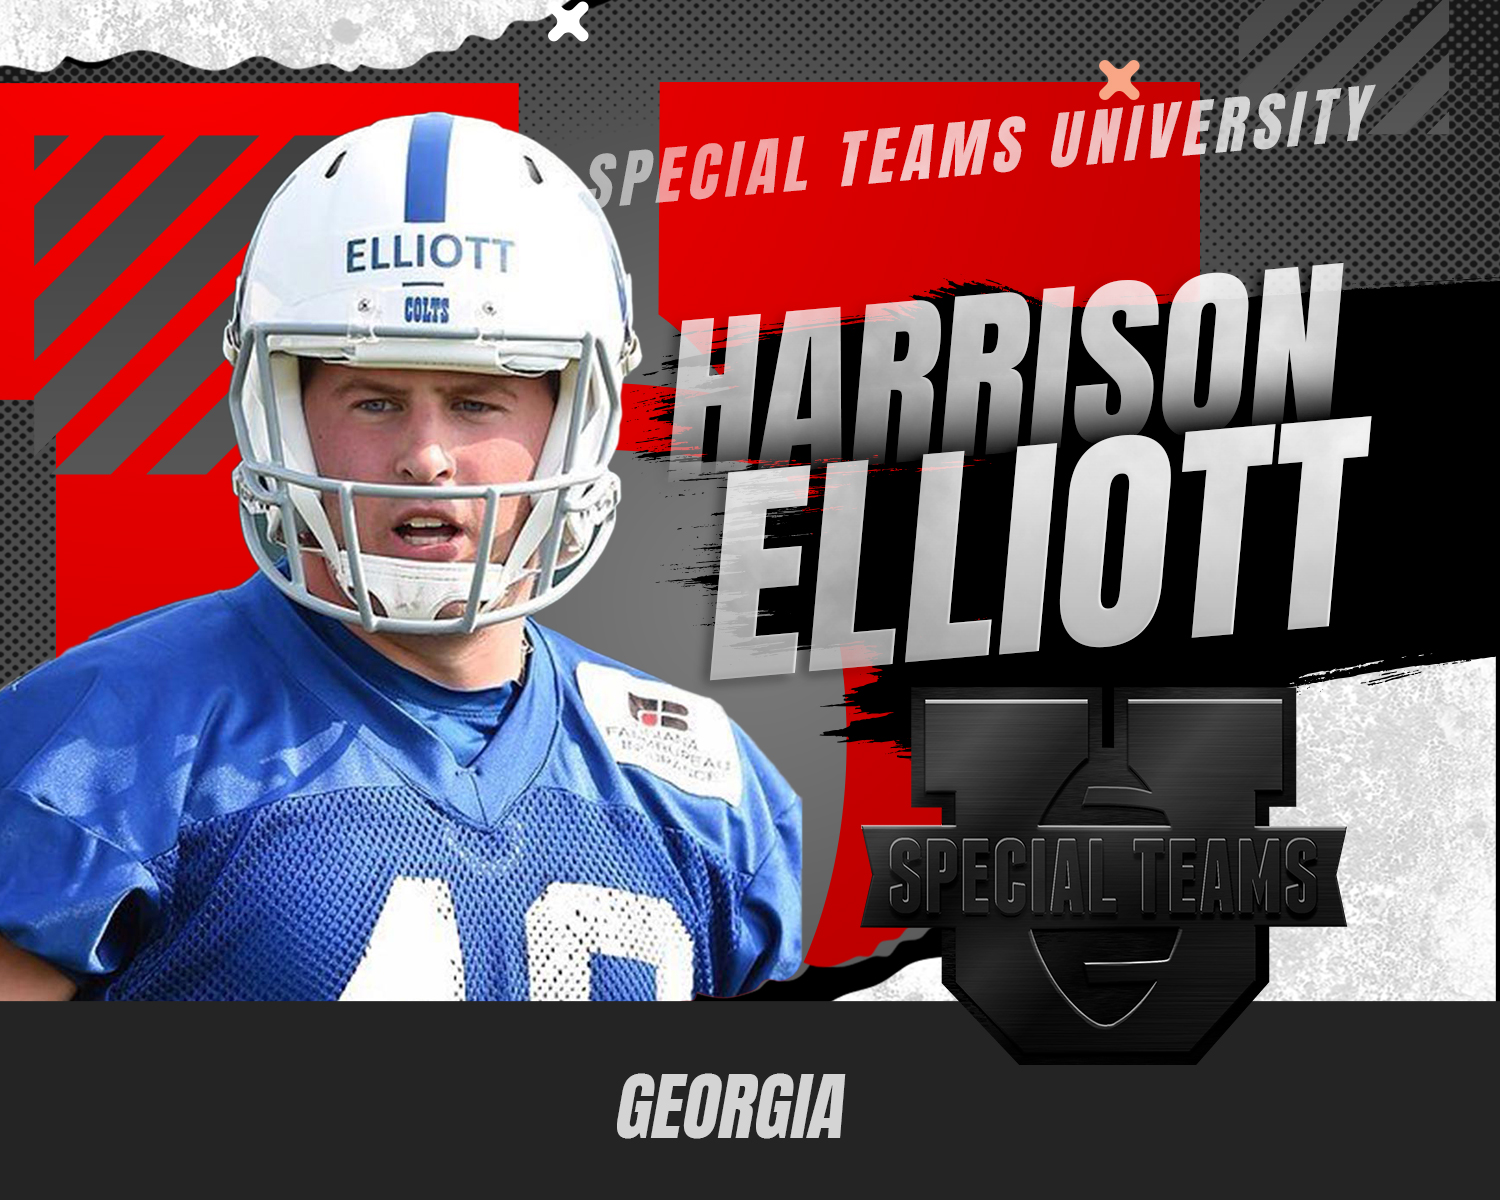 Georgia, Harrison Elliott, Long Snapping Coach